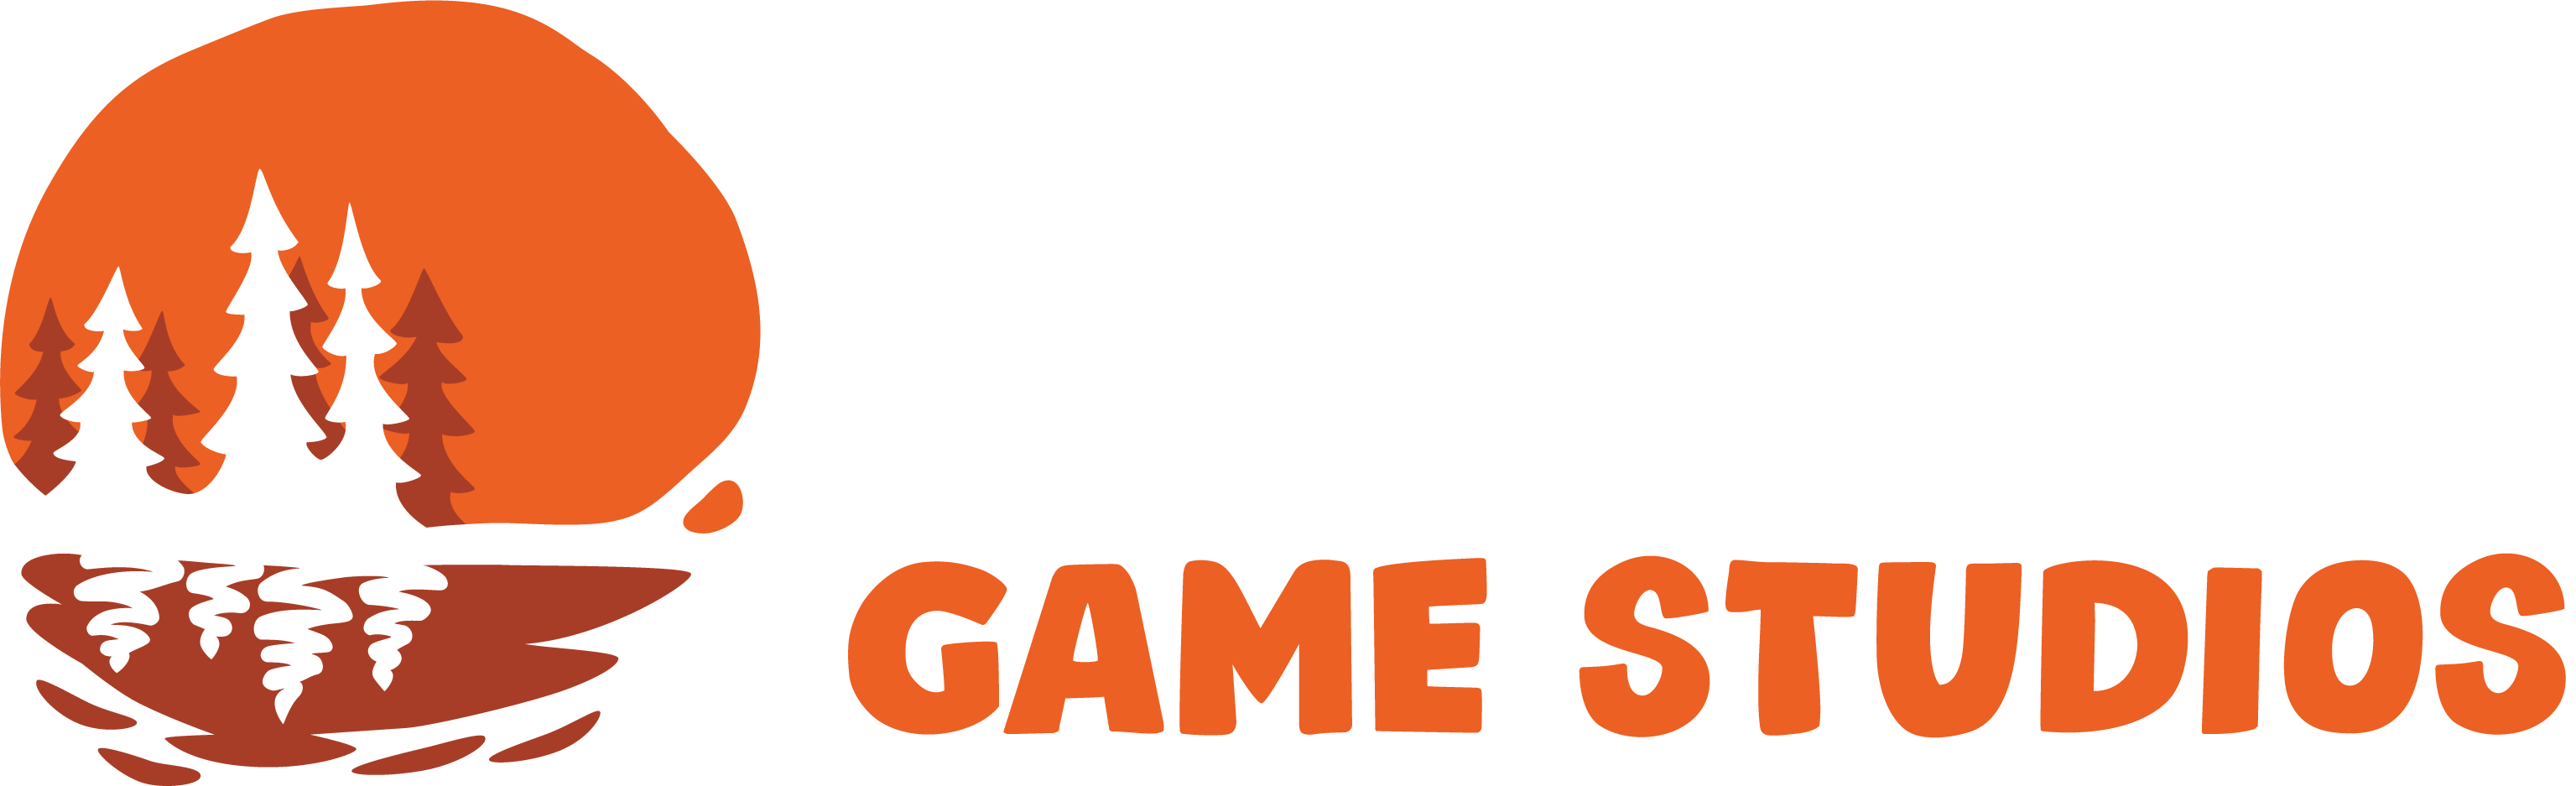 Mirage Game Studios